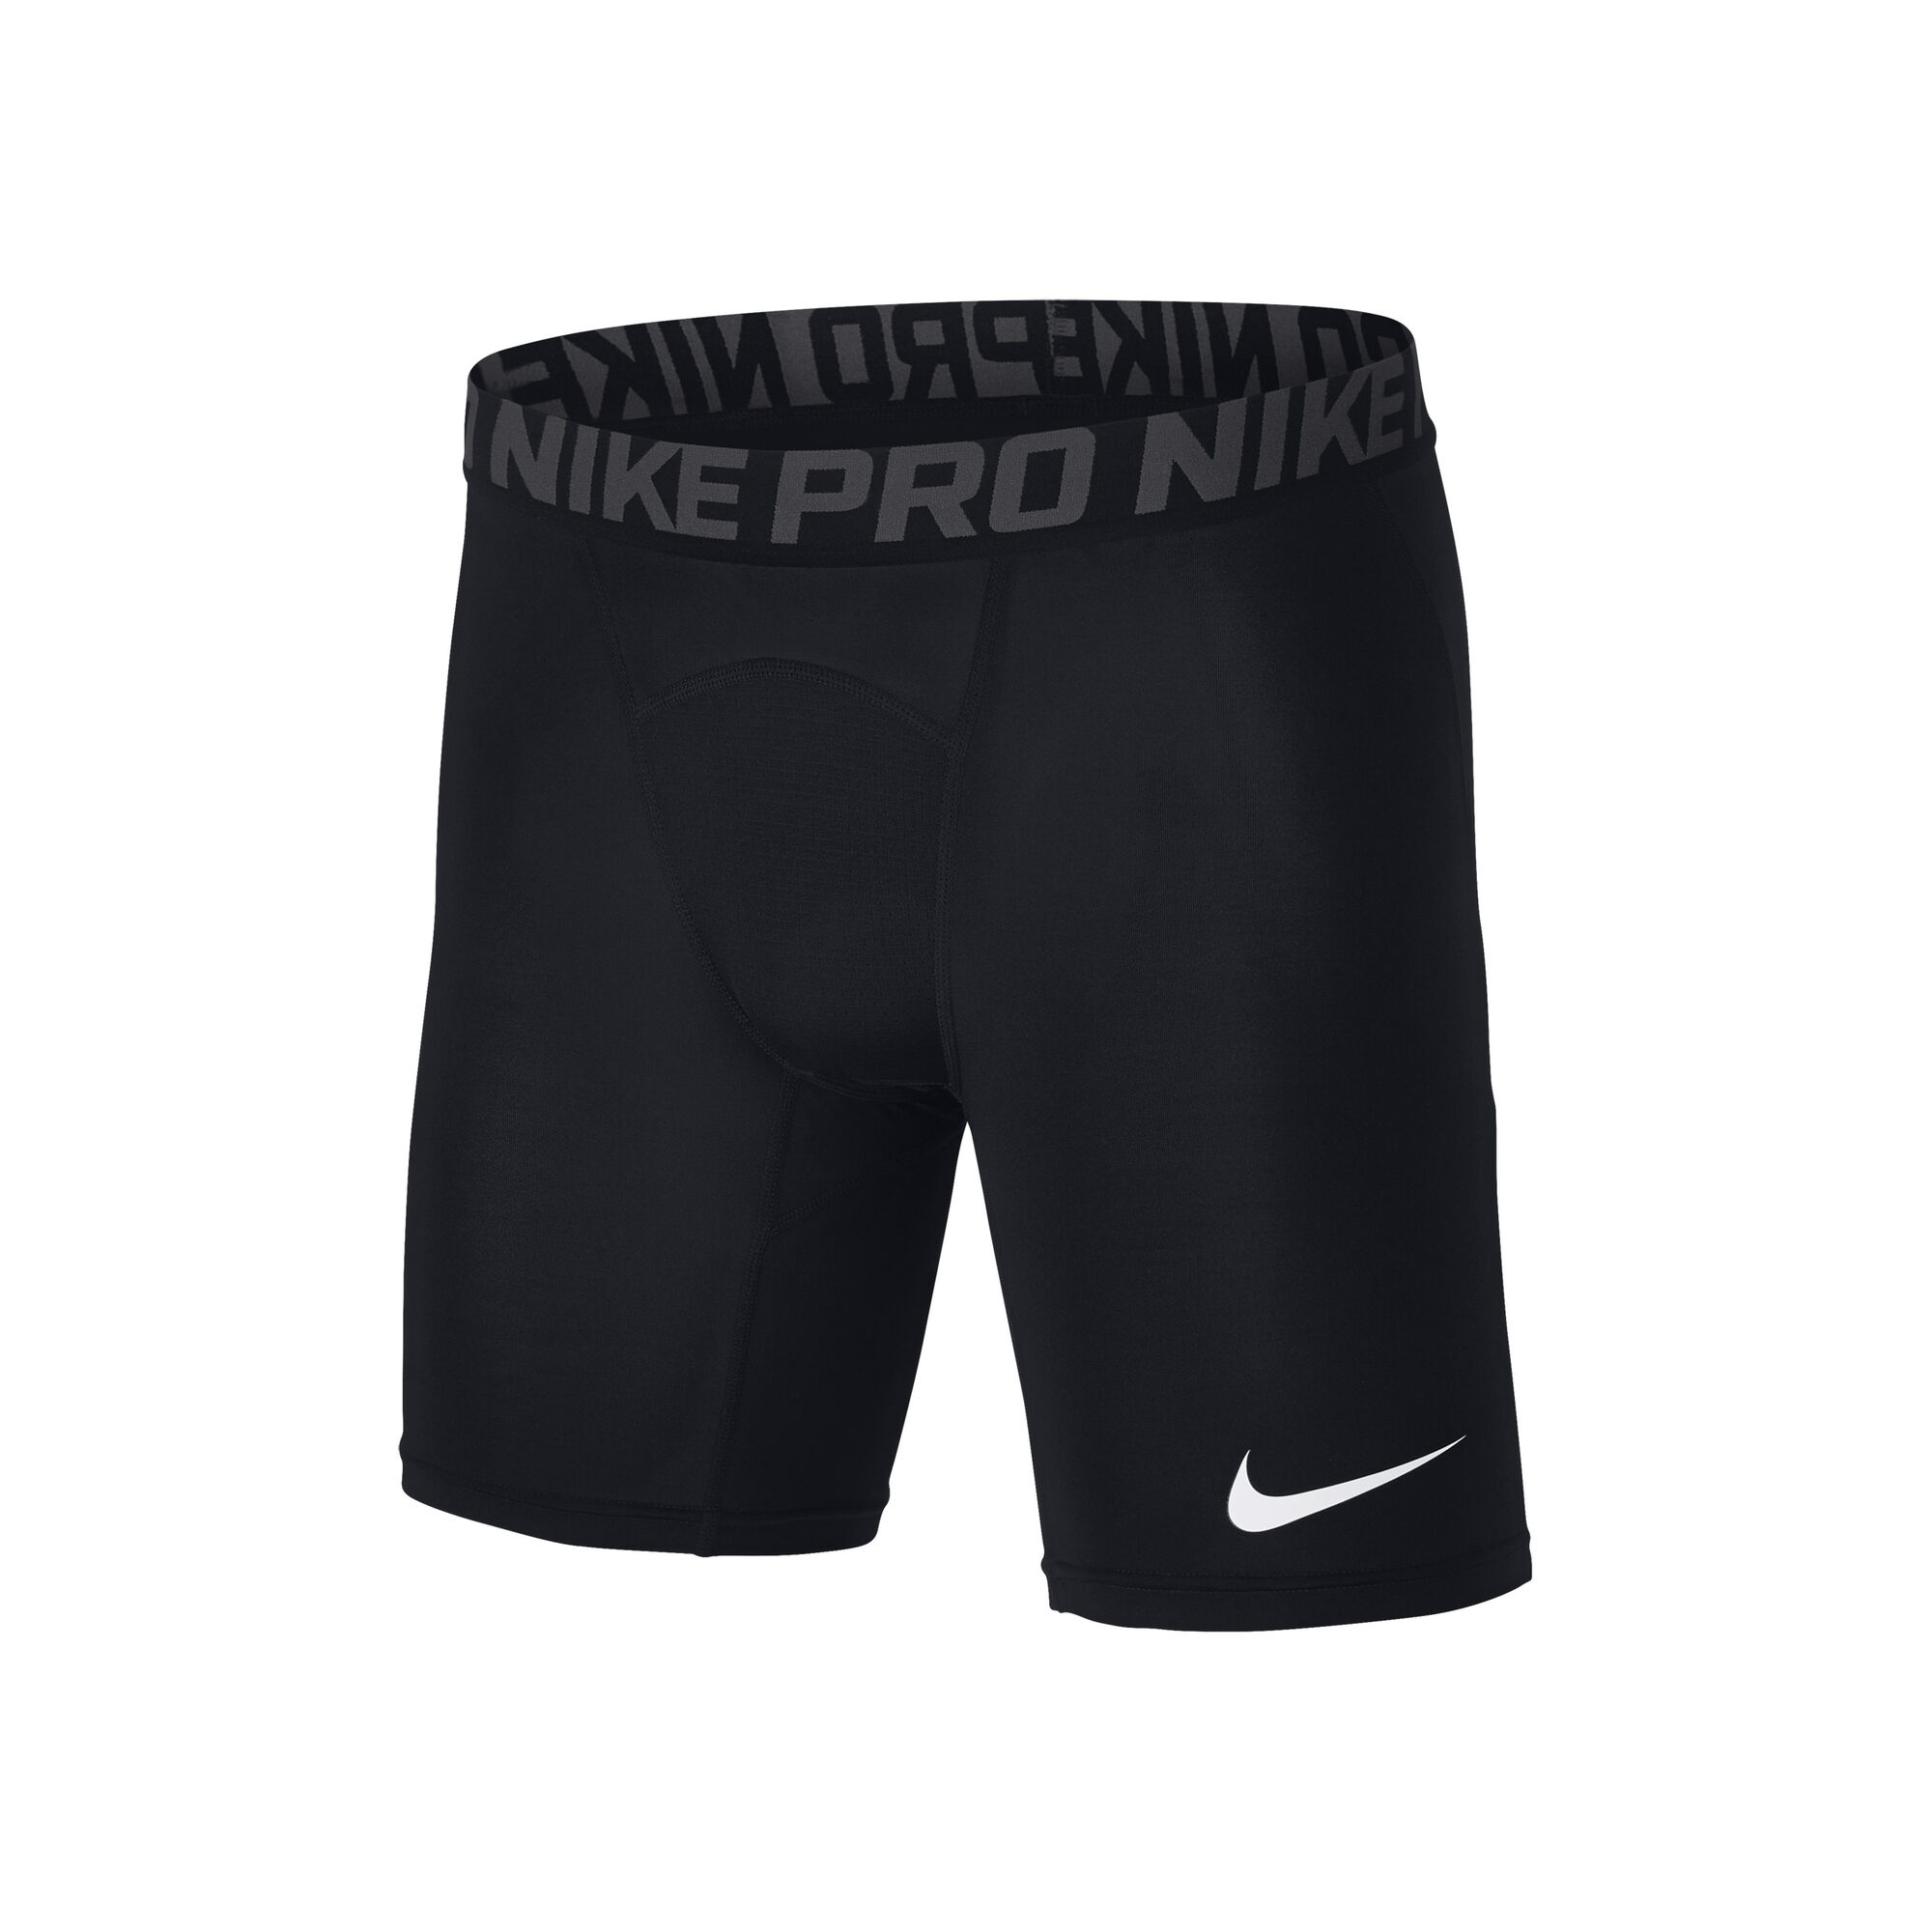 buy Nike Pro Shorts Men - Black, Dark online | Tennis-Point